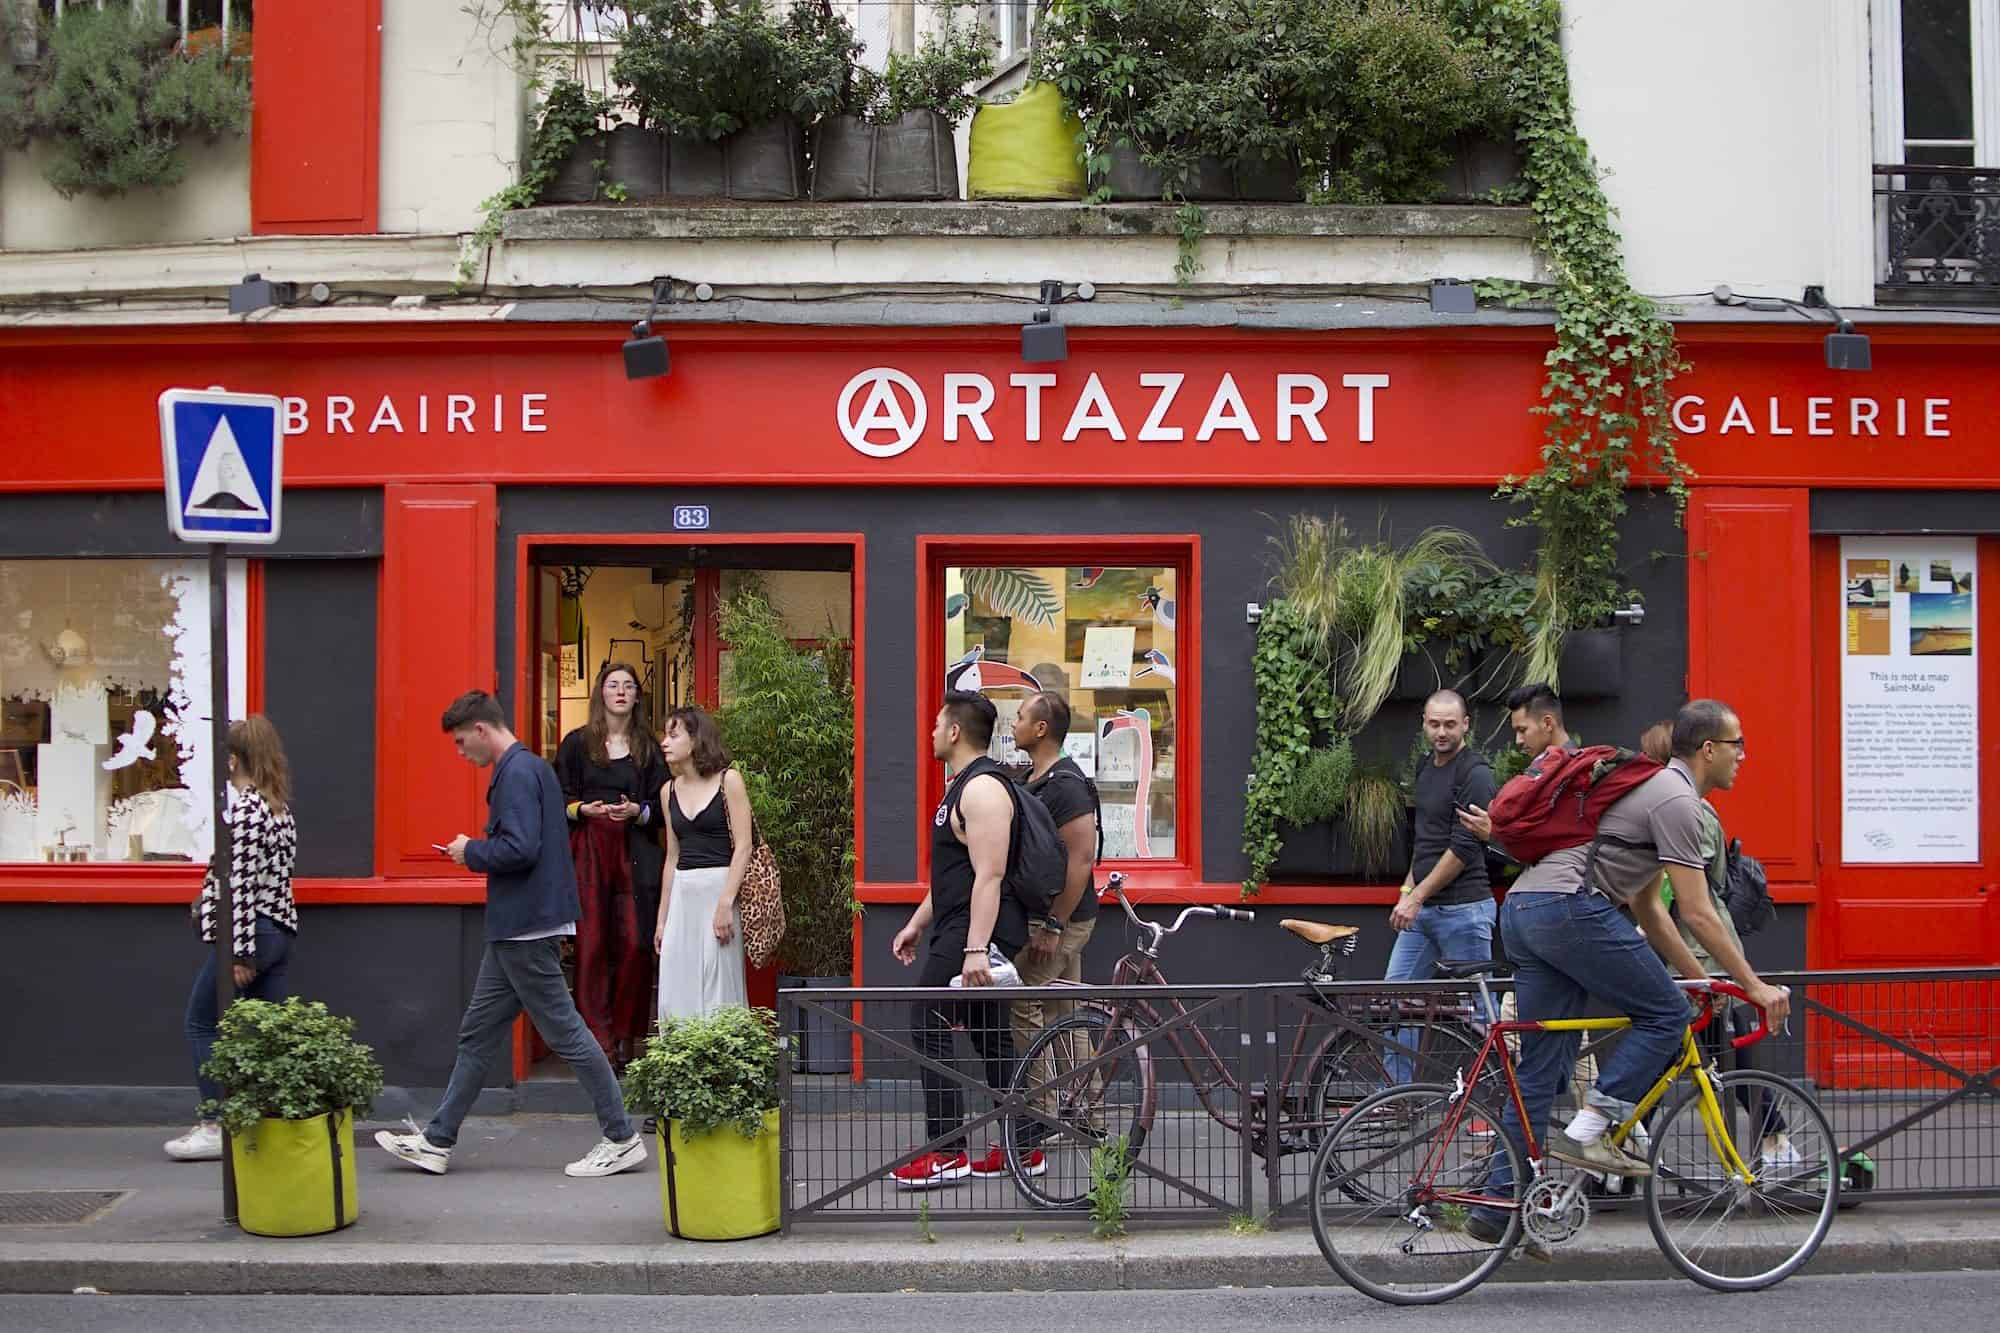 Artazart, a popular arty bookshop along the Canal Saint Martin in Paris.